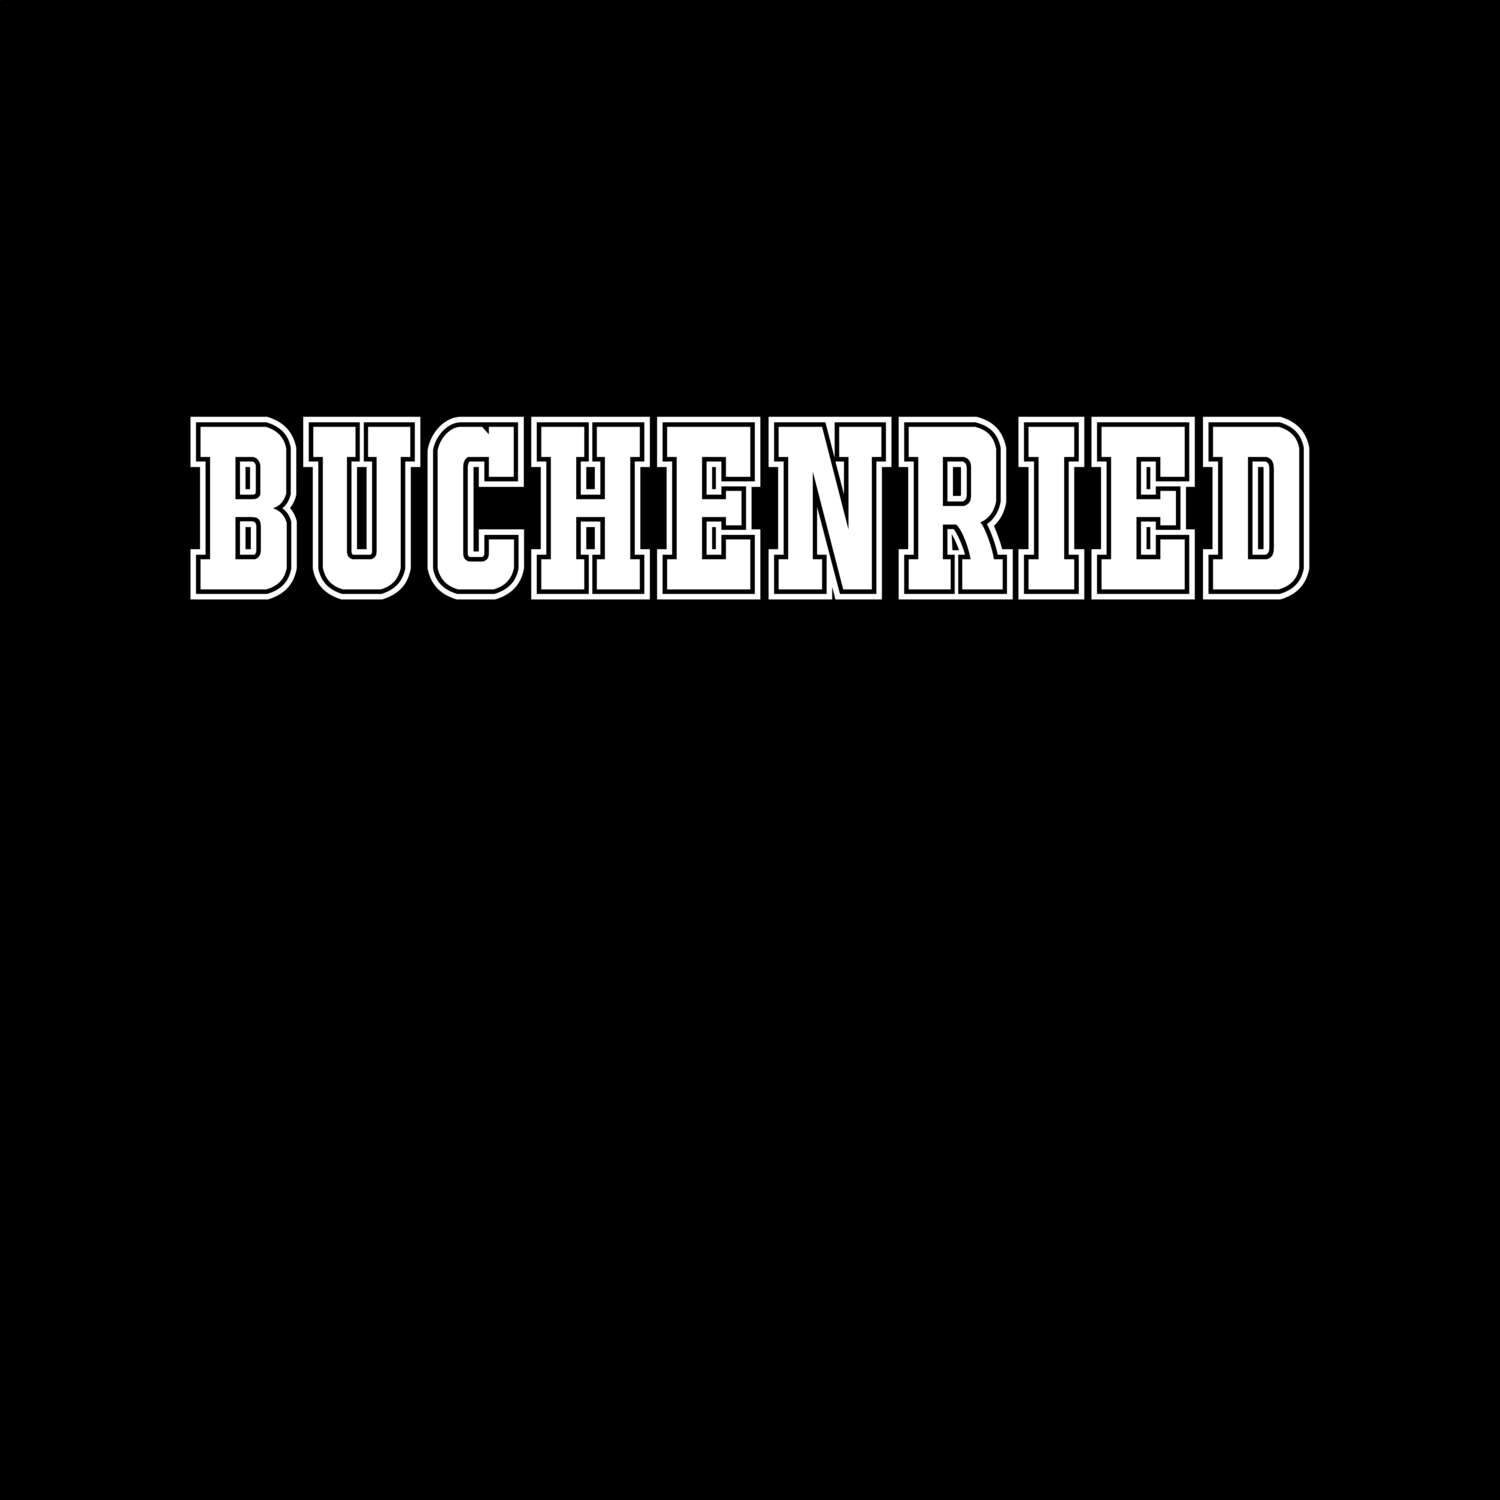 Buchenried T-Shirt »Classic«